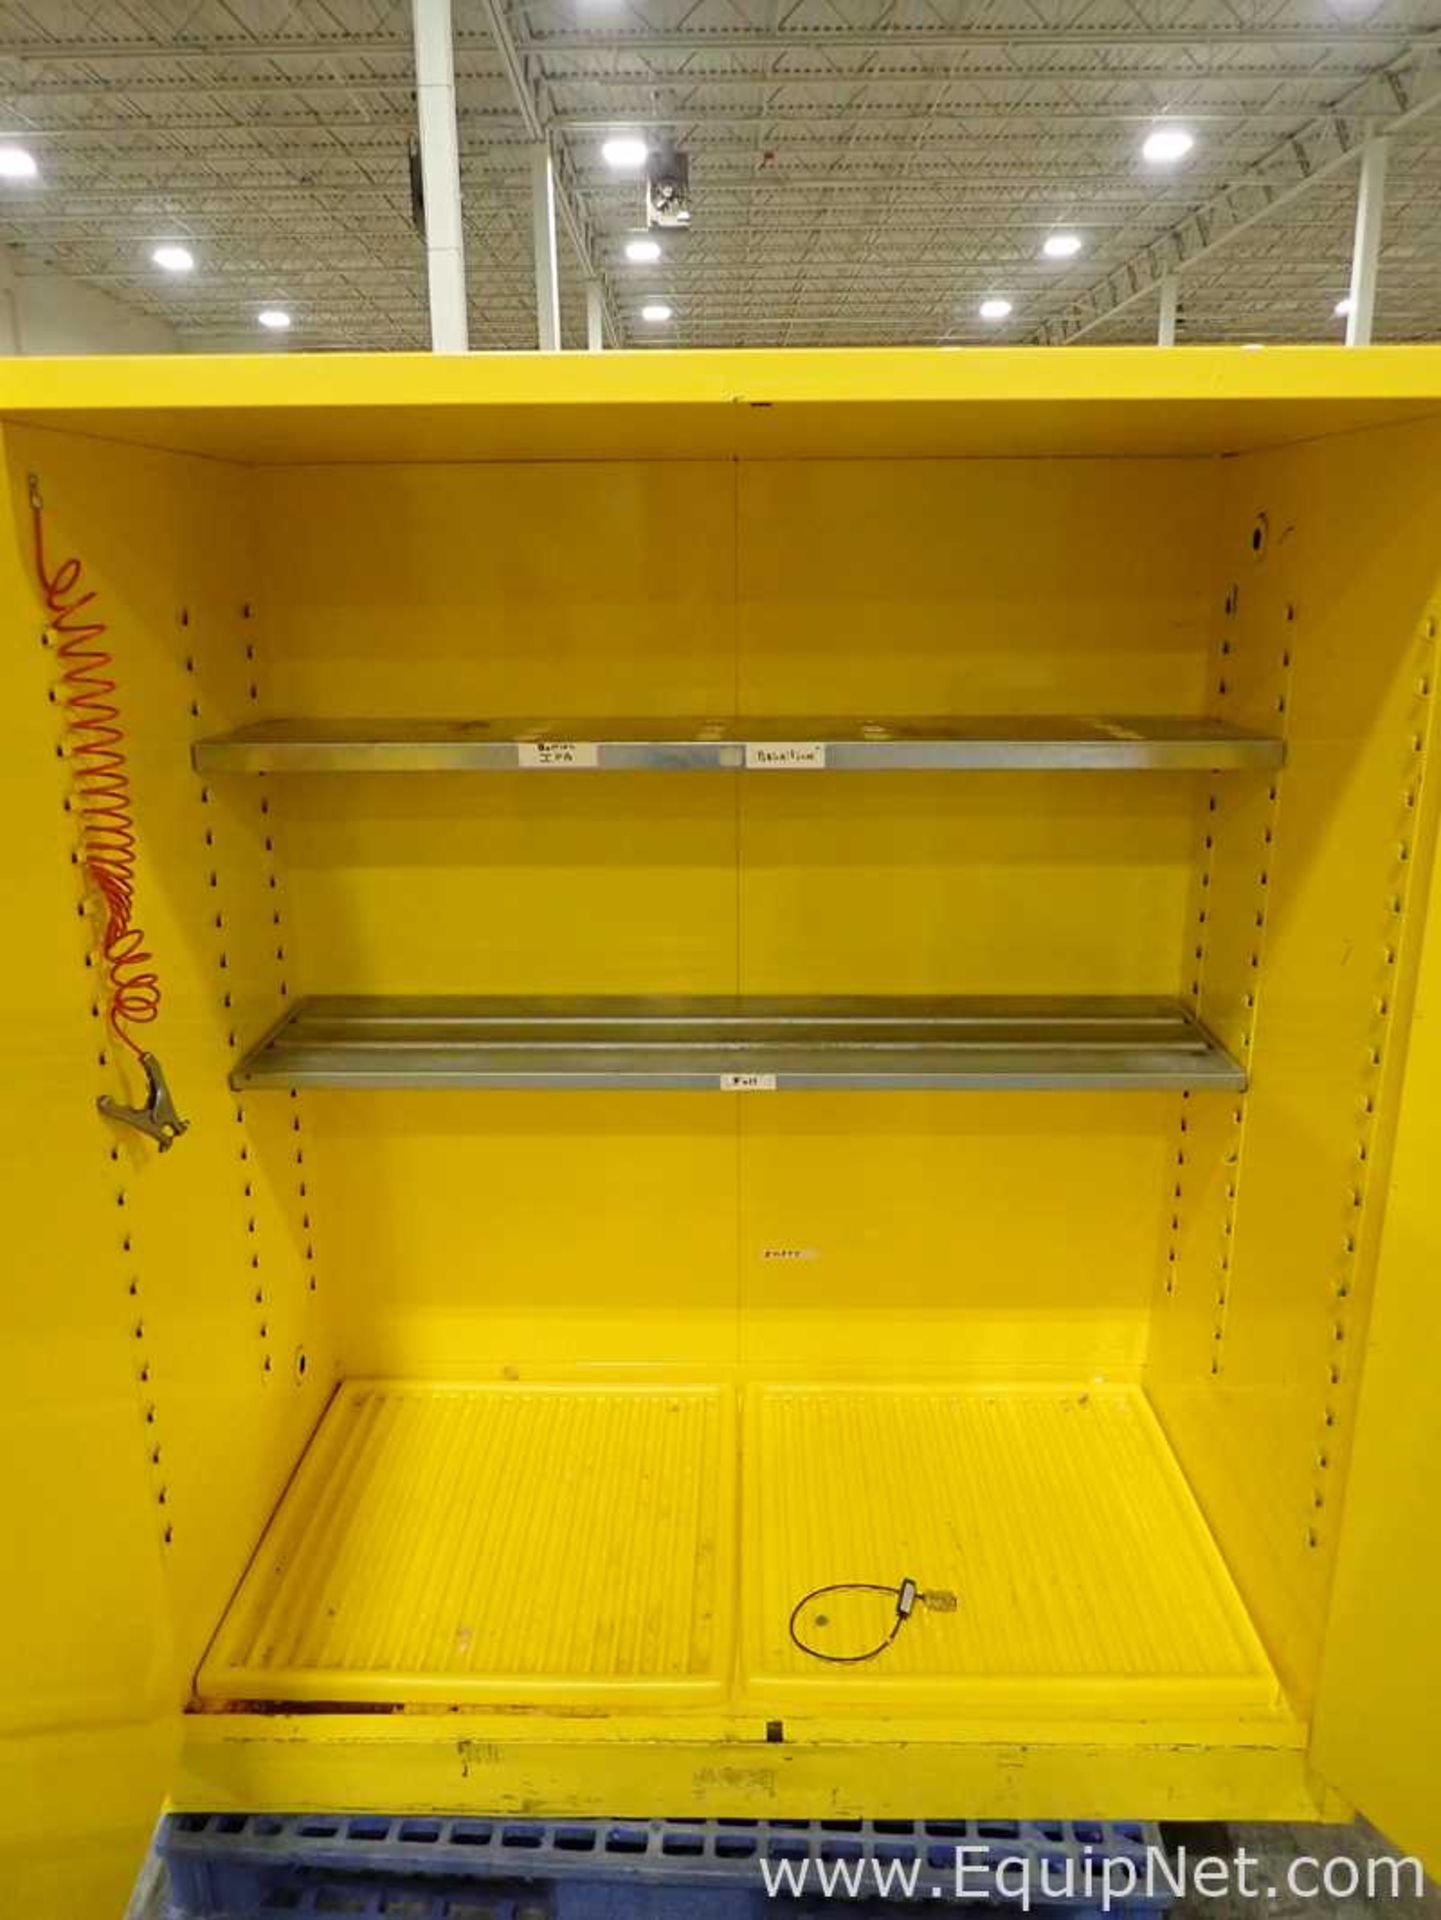 JustRite 25760 416 Liter Combustible Liquid Storage Cabinet - Image 2 of 8